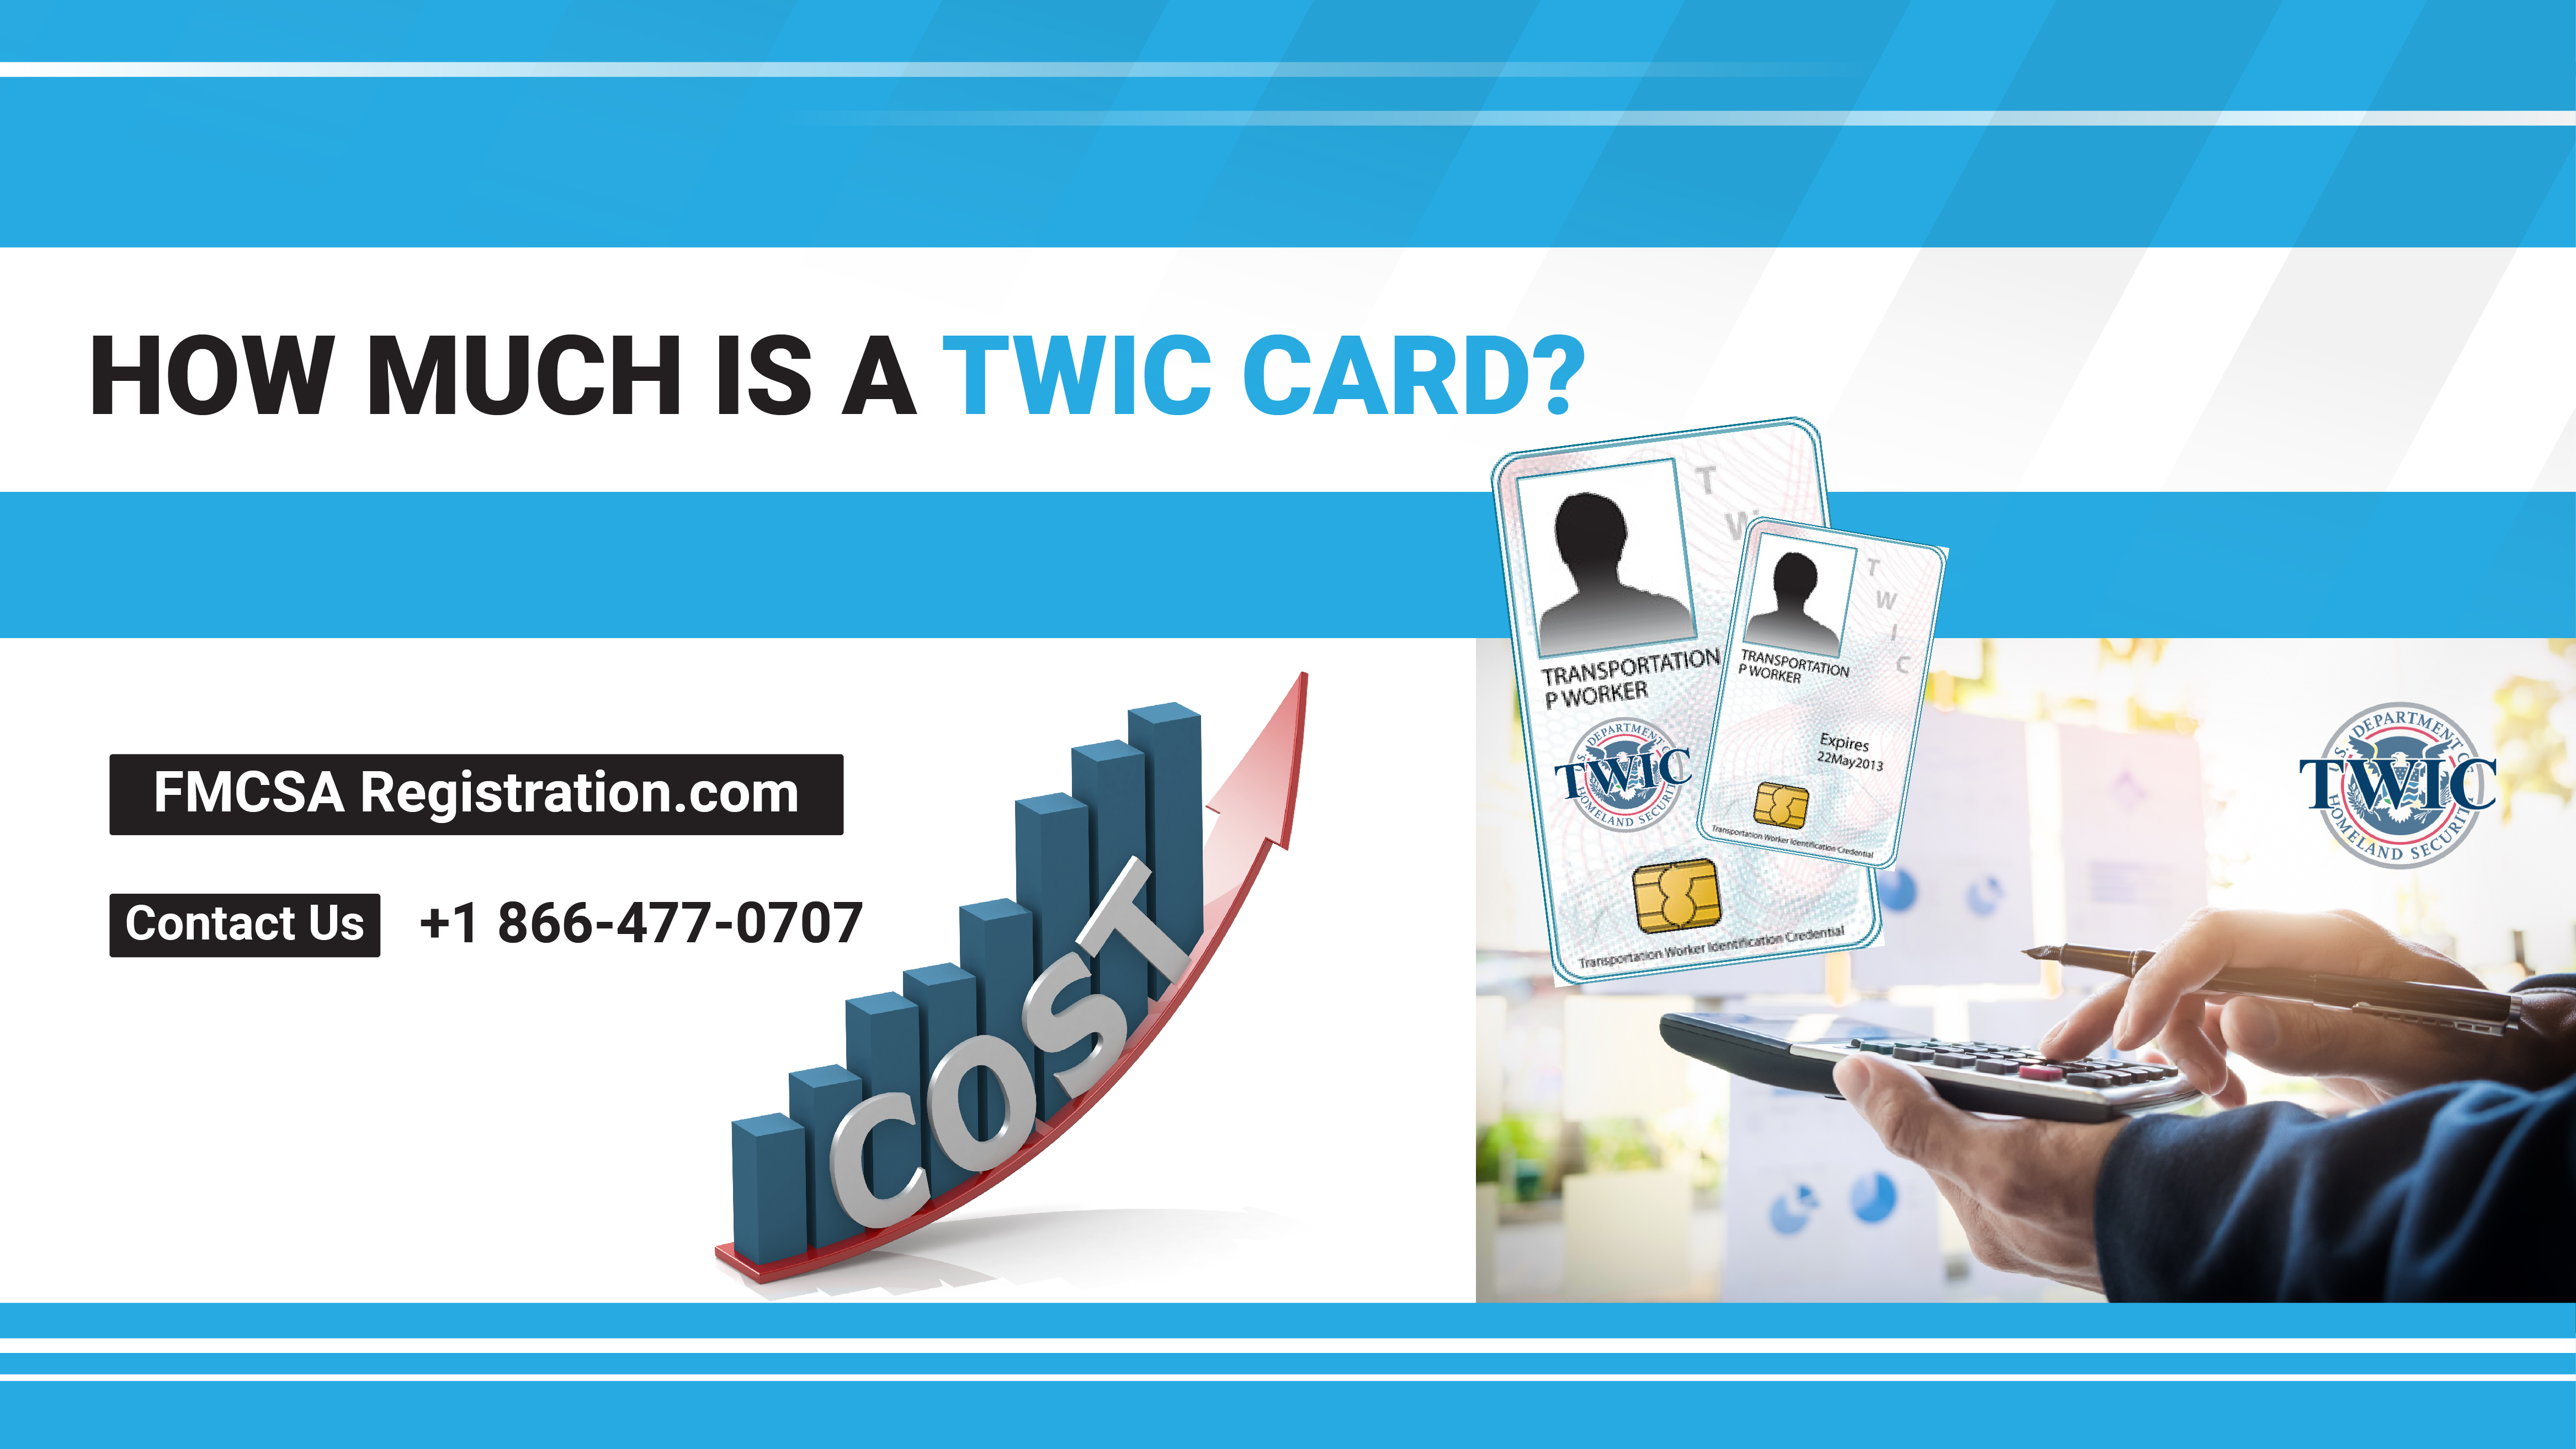 Identification Credential, TWIC Card, TWIC application, TWIC